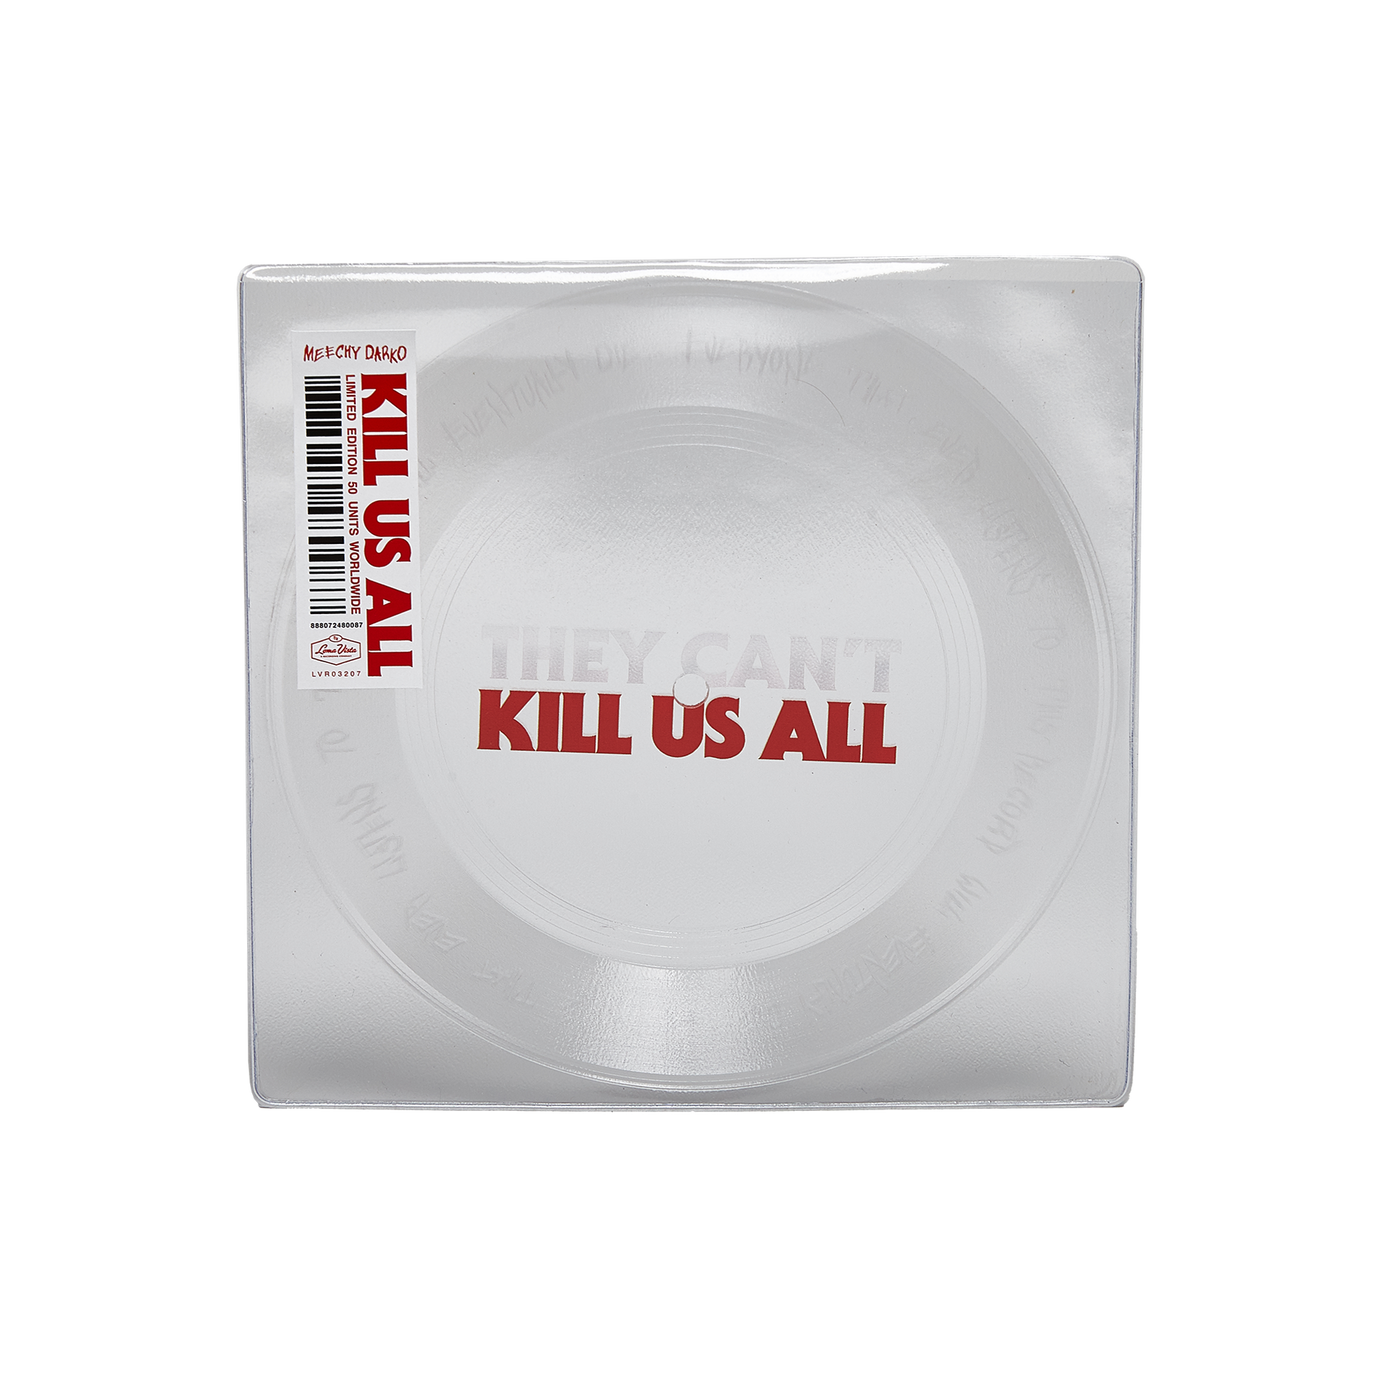 Kill Us All Limited Edition Lathe Cut 7" (Edition of 50 units worldwide)